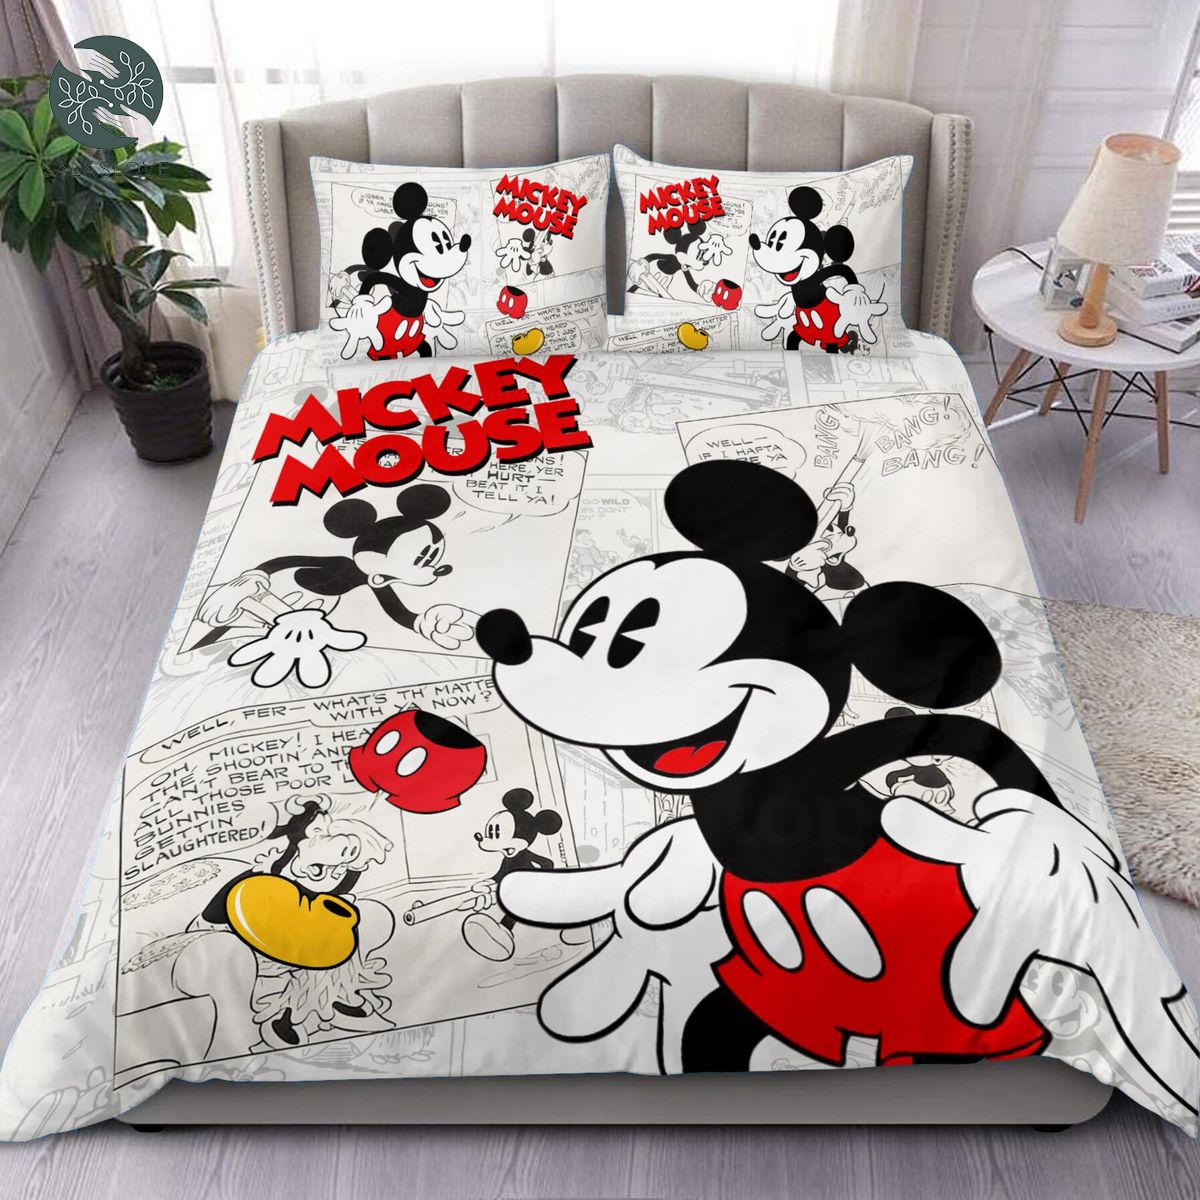 Disney Mickey Mouse Comic Bedding Set Cartoon Bedset Duvet Cover